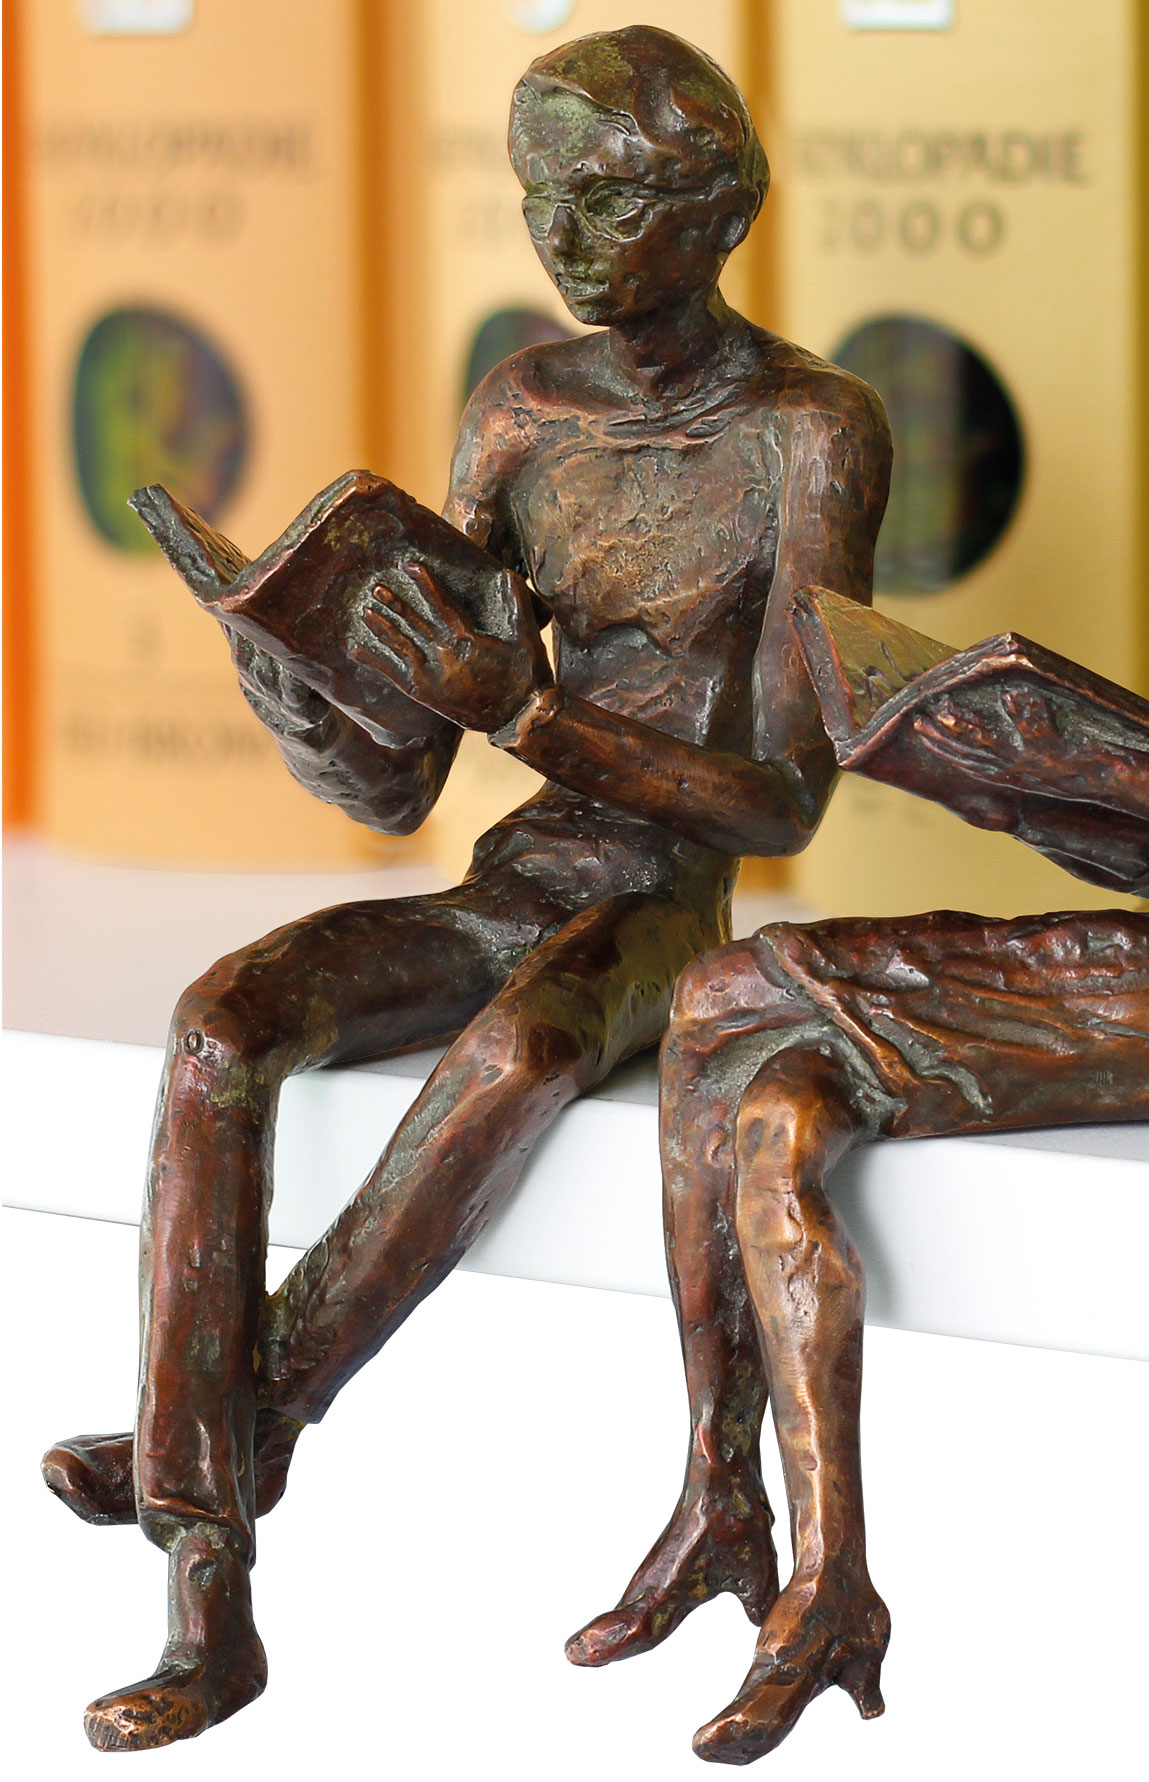 Sculpture / shelf sitter "Reading Man", metal casting by Birgit Stauch